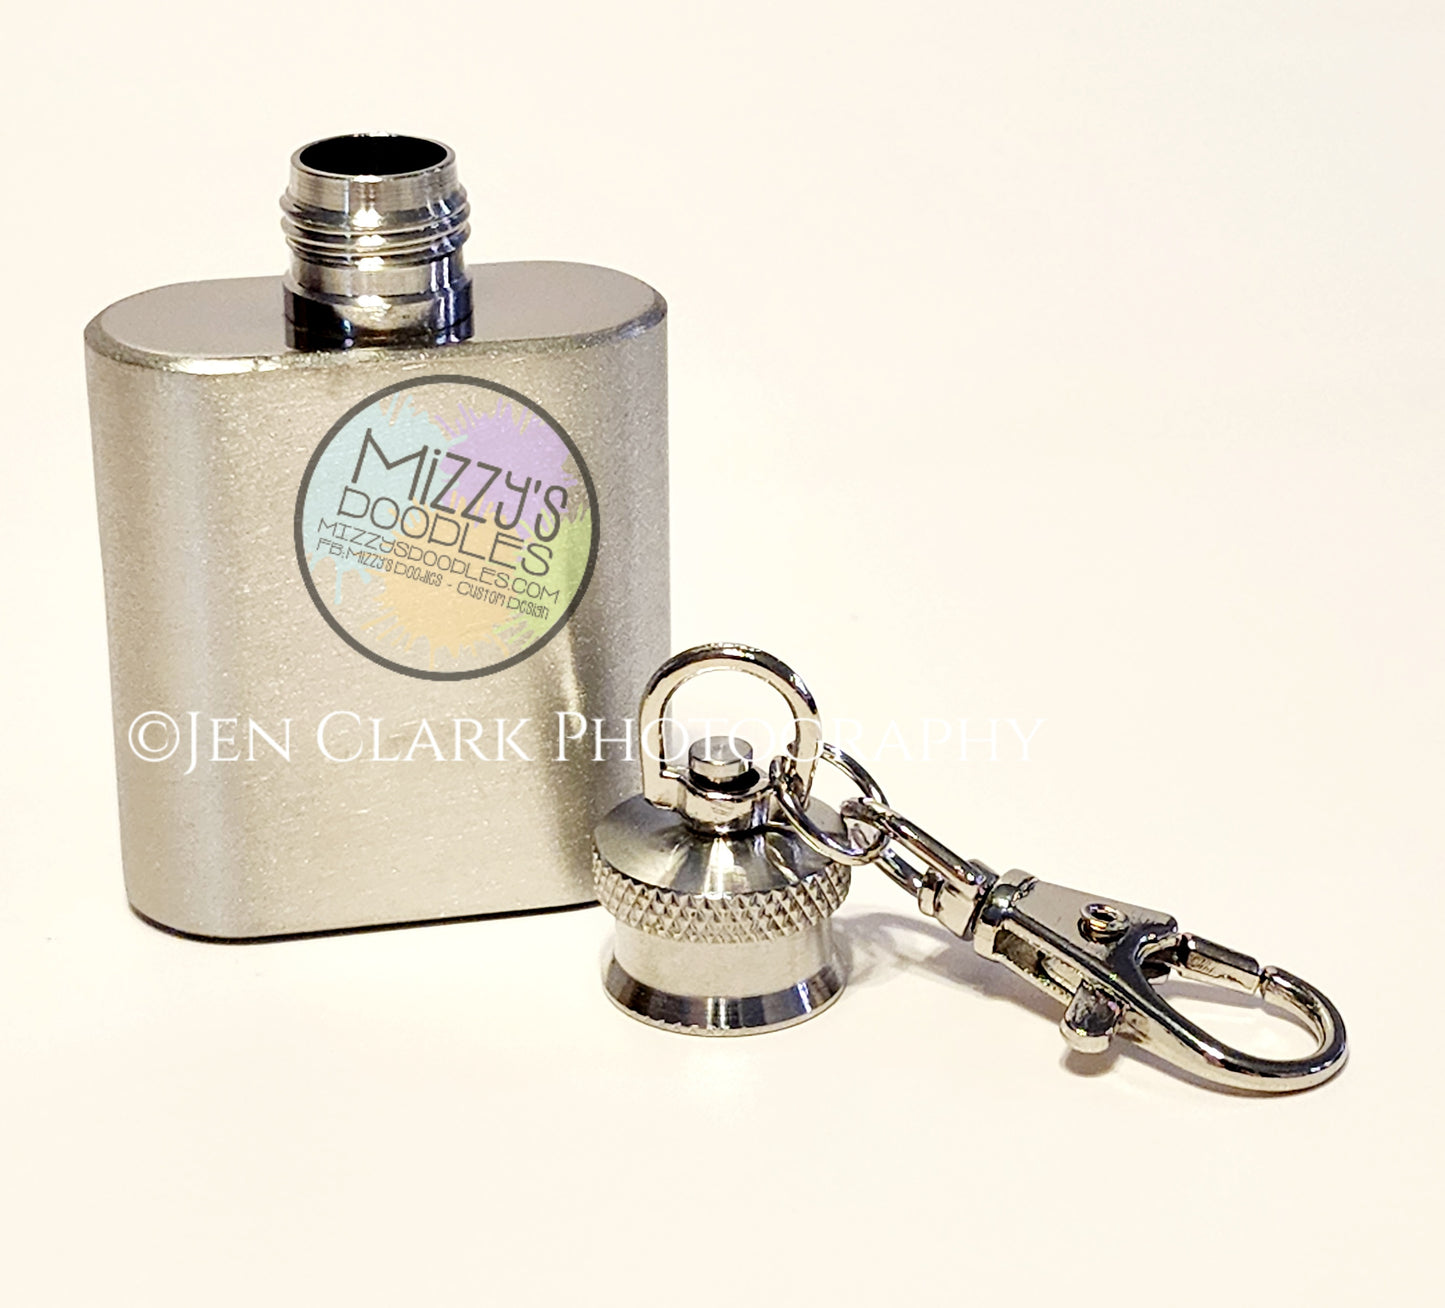 1 oz. Stainless steel keychain drinking flask